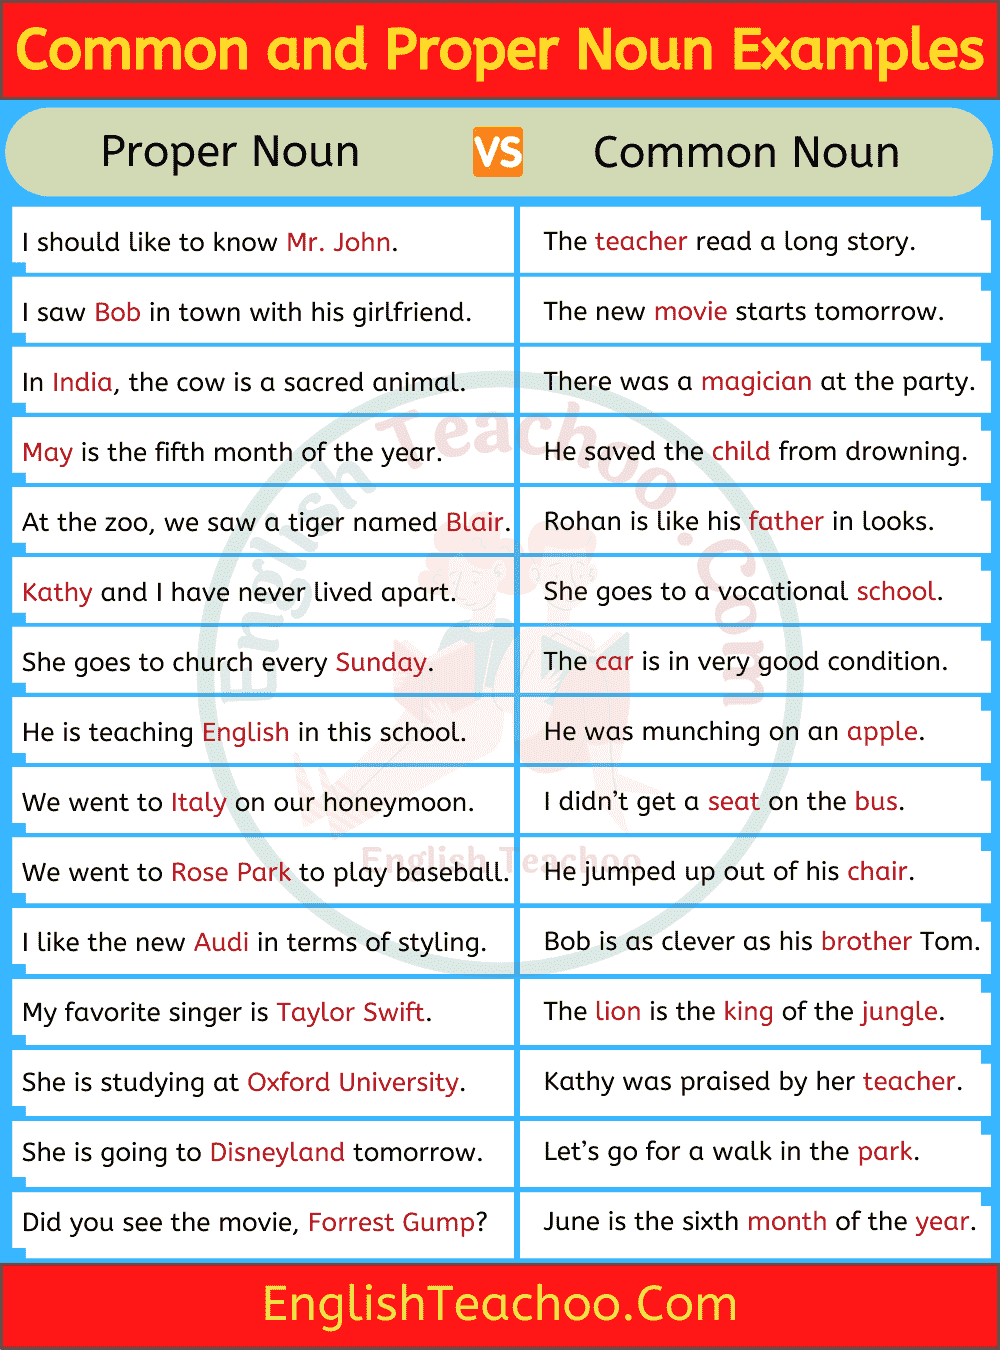 common-noun-and-proper-noun-examples-englishteachoo